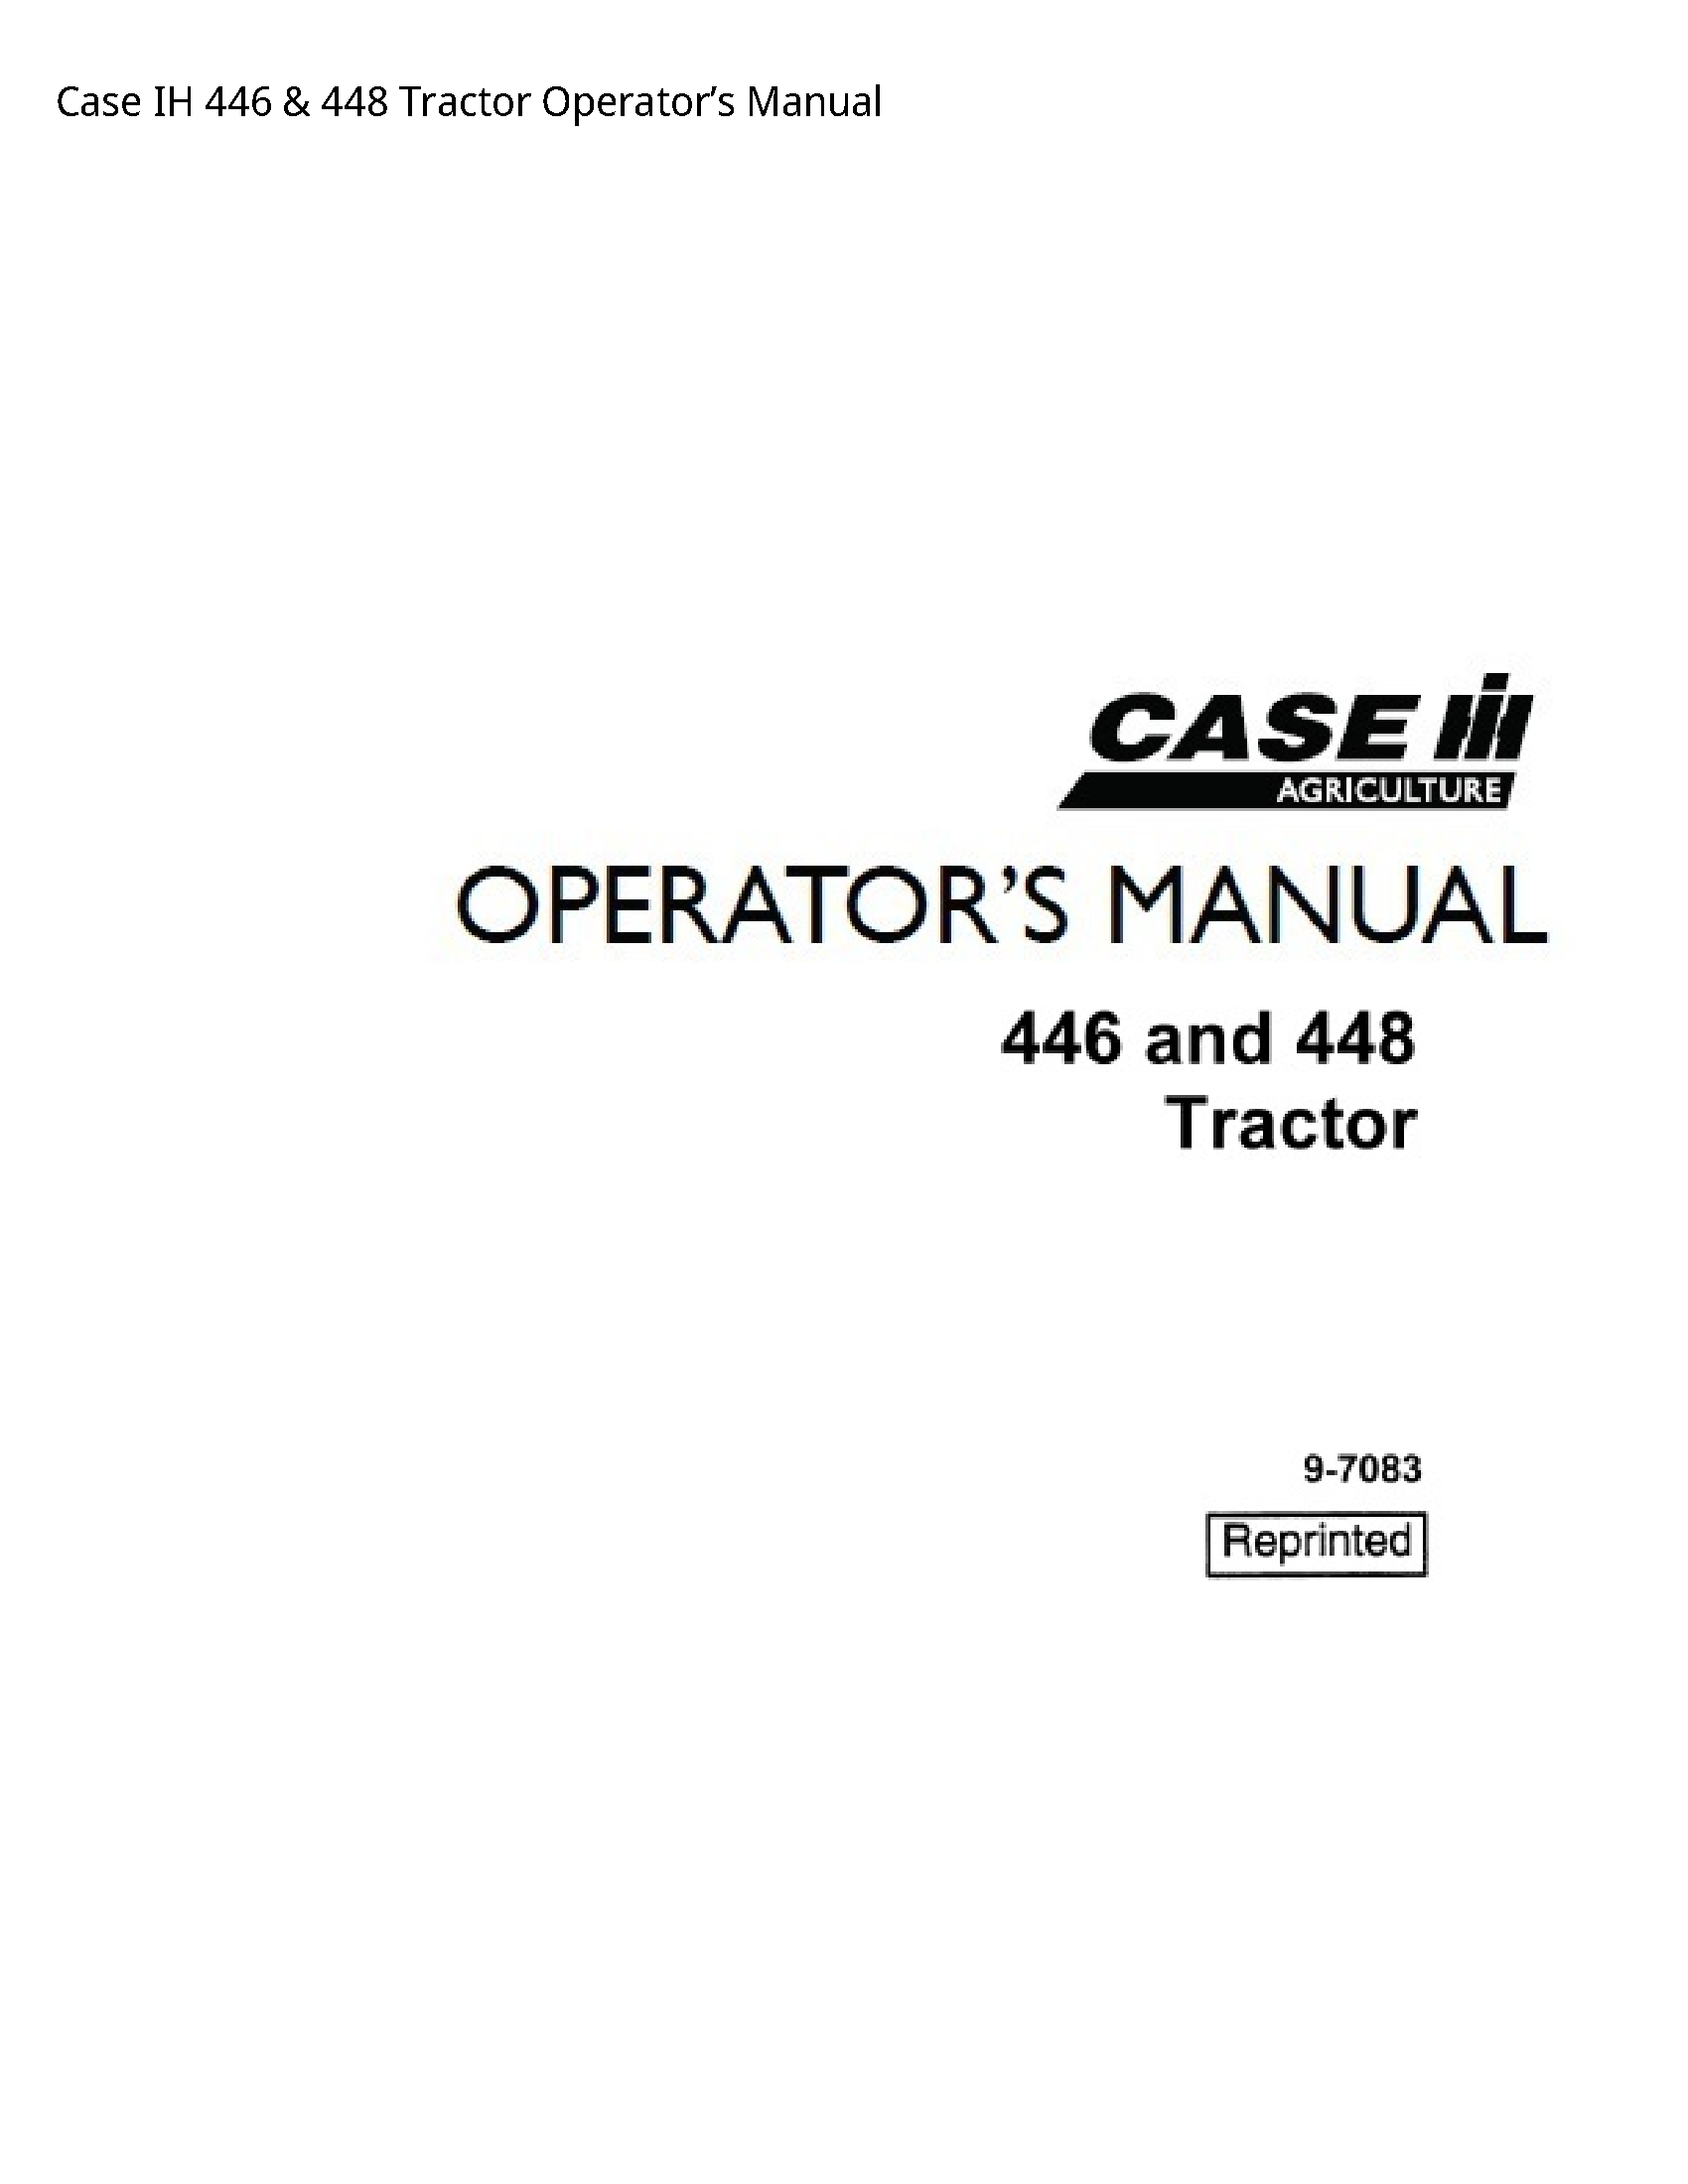 Case/Case IH 446 IH Tractor Operator’s manual